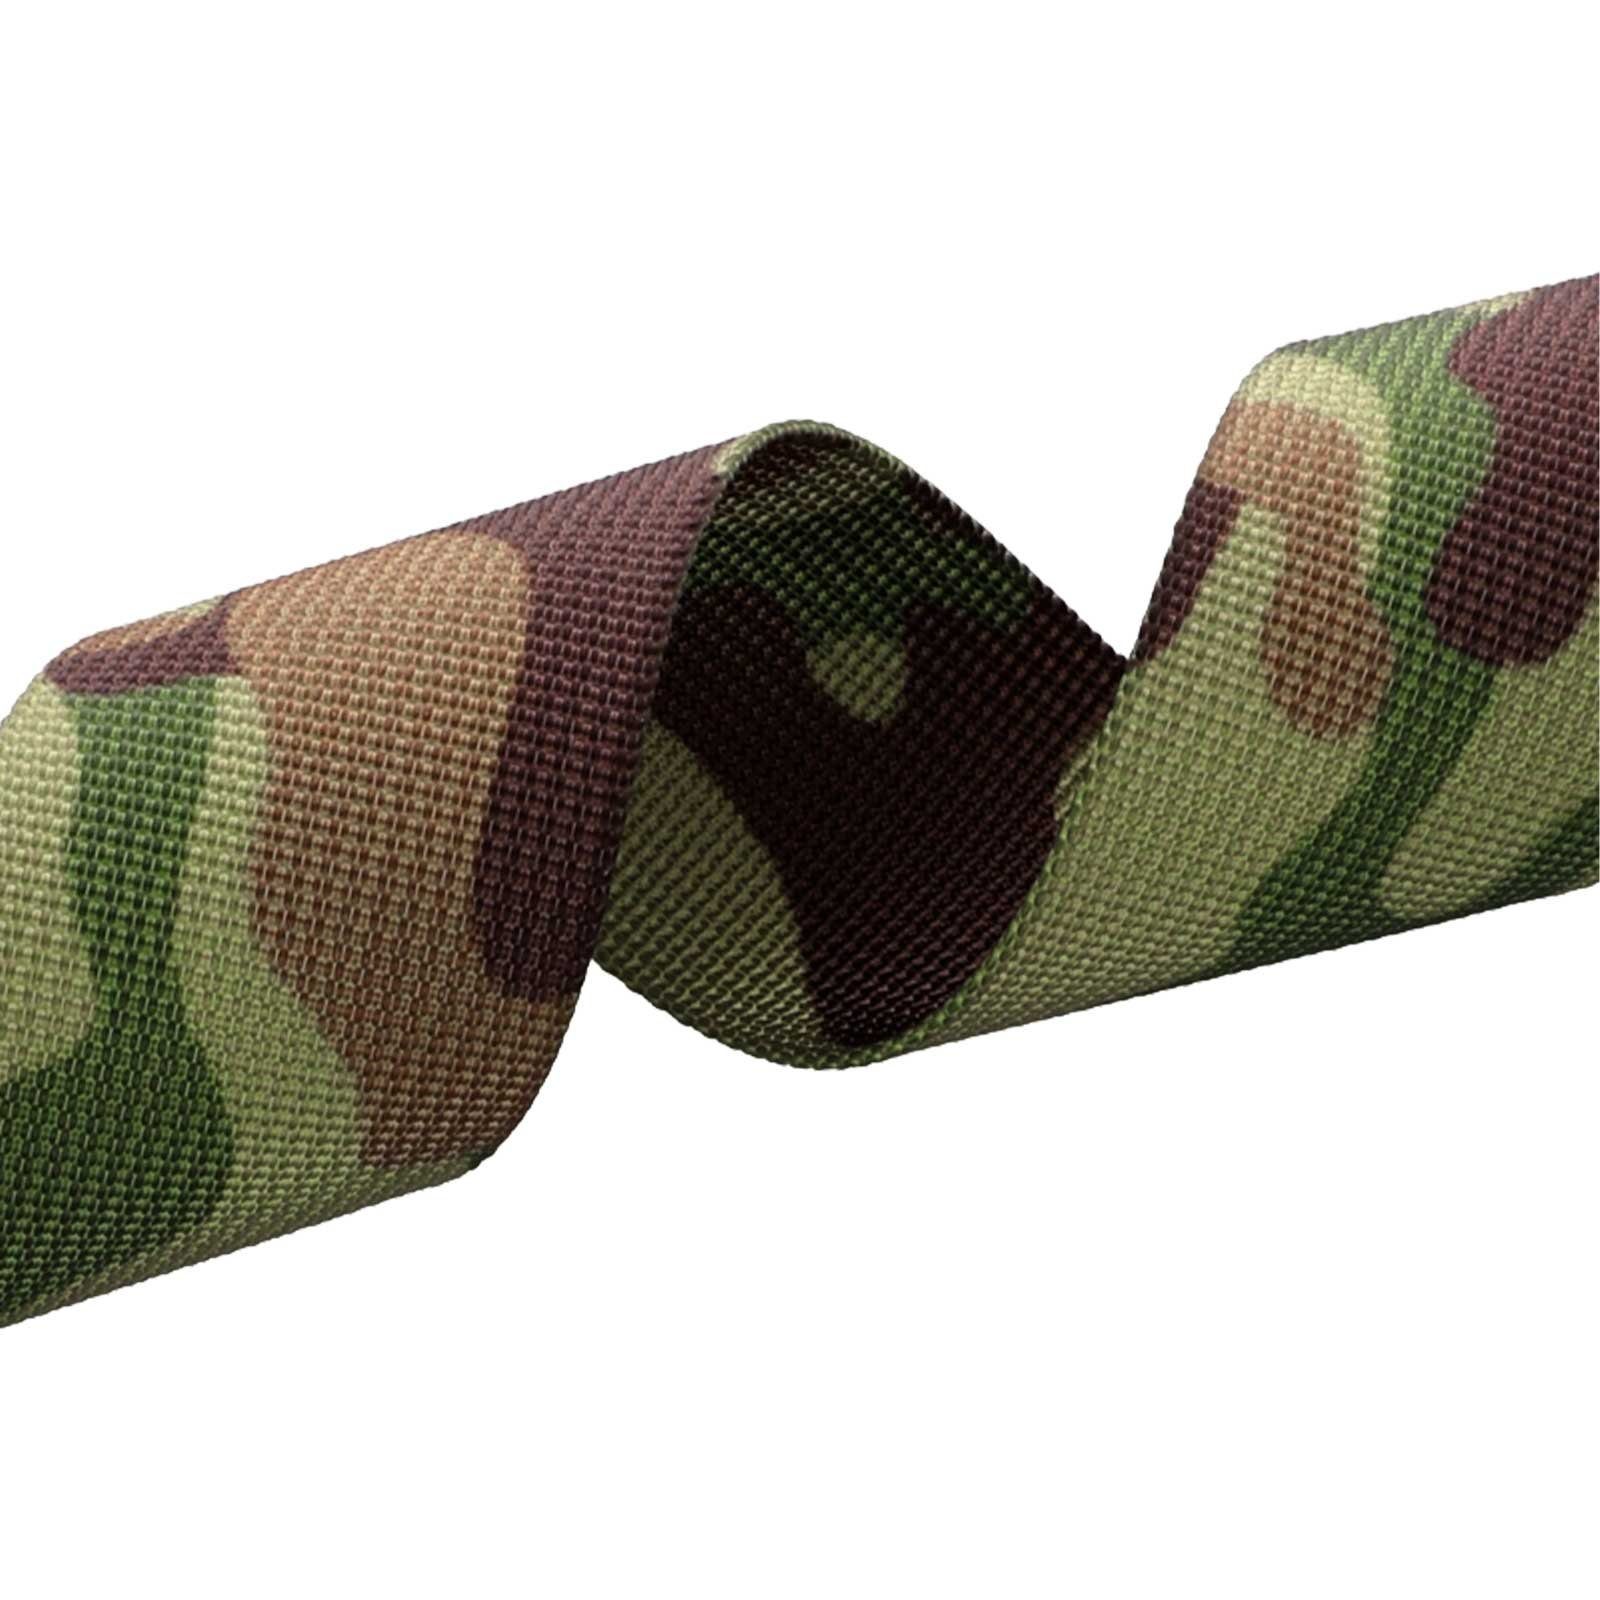 Gurtband Design maDDma Tarnmuster camouflage 50m im Rollladengurt,